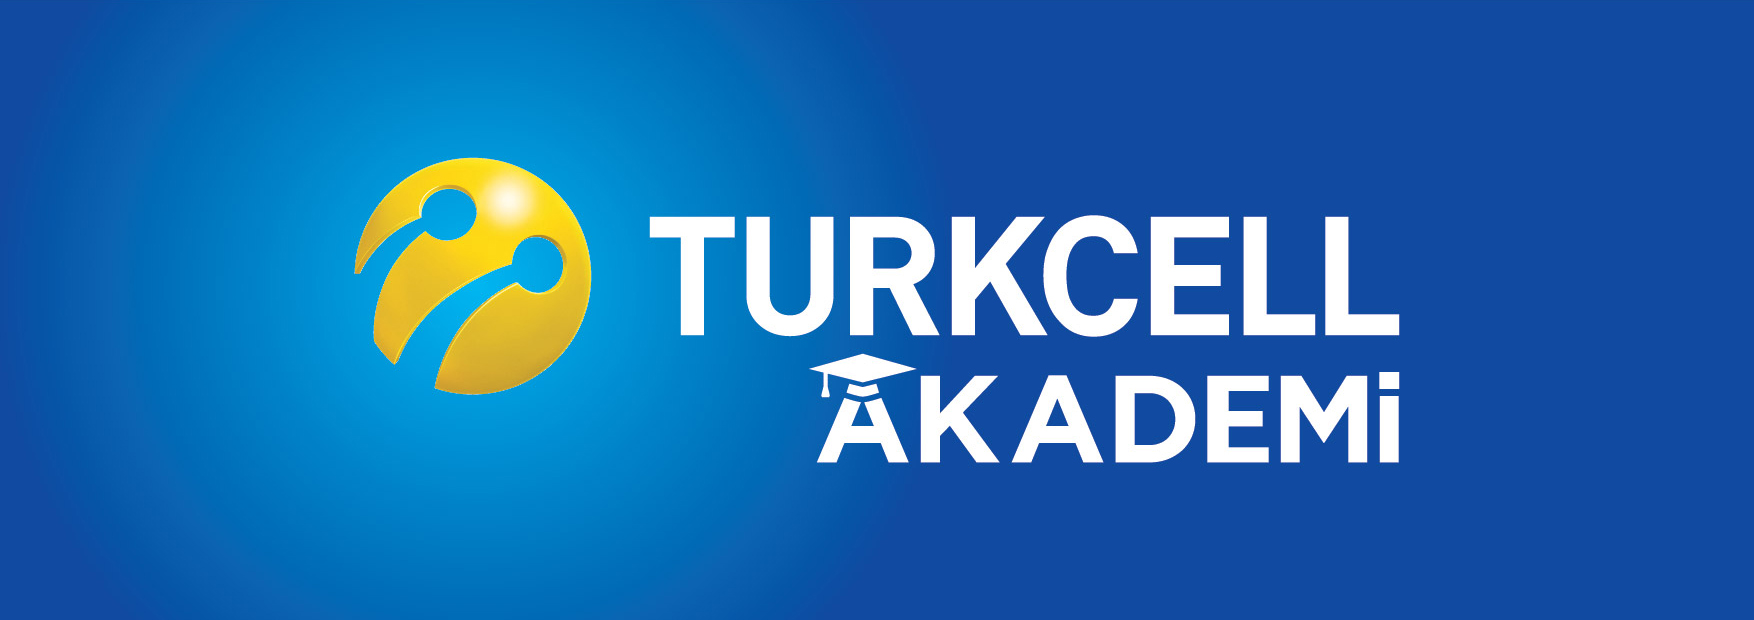 Turkcell Tim Logo photo - 1